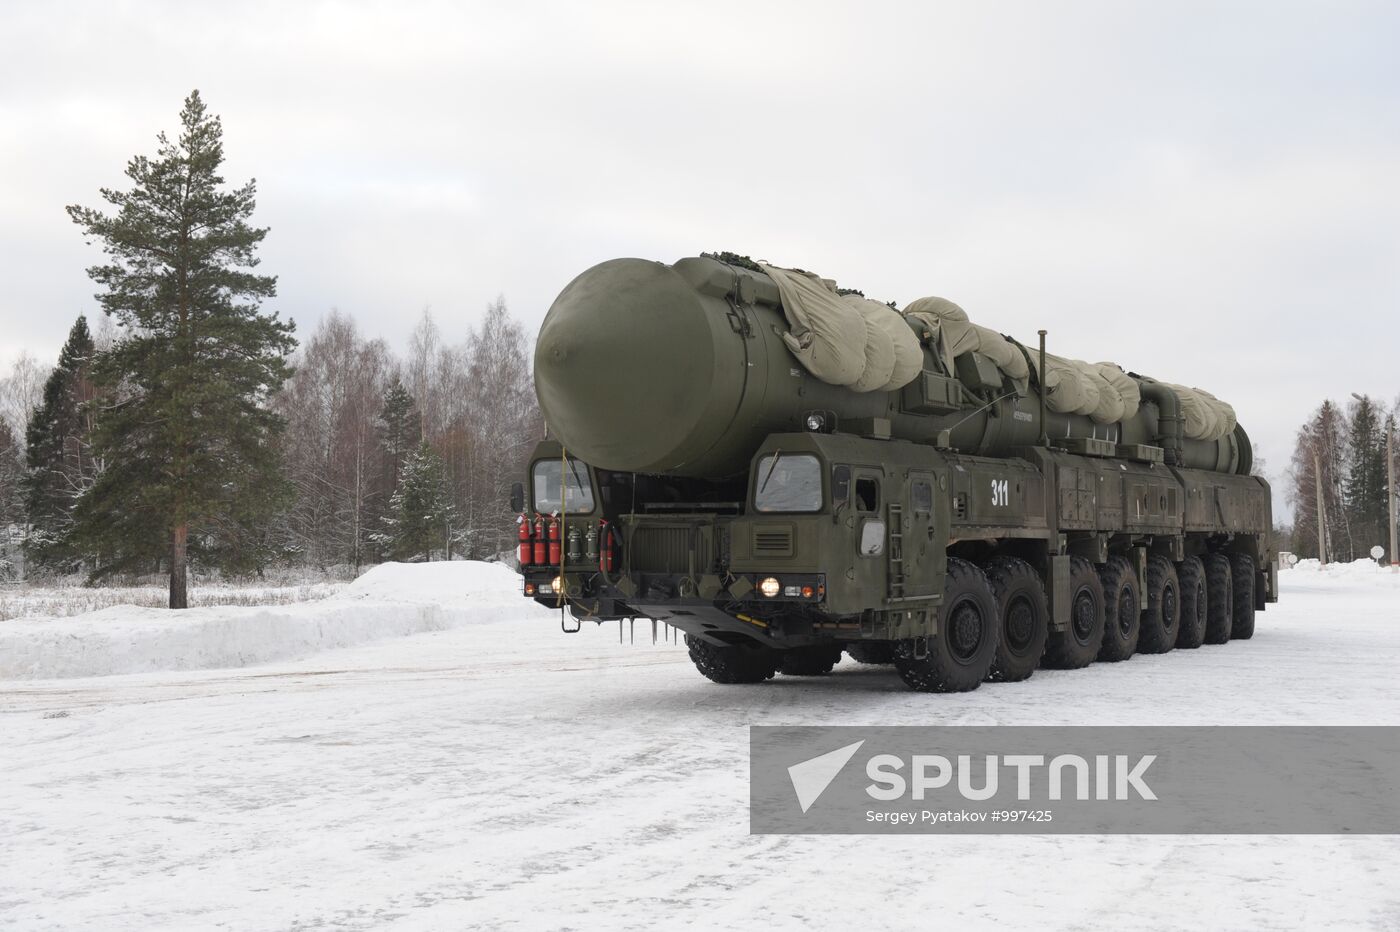 Teykovo air defence missile formation in Ivanovo region